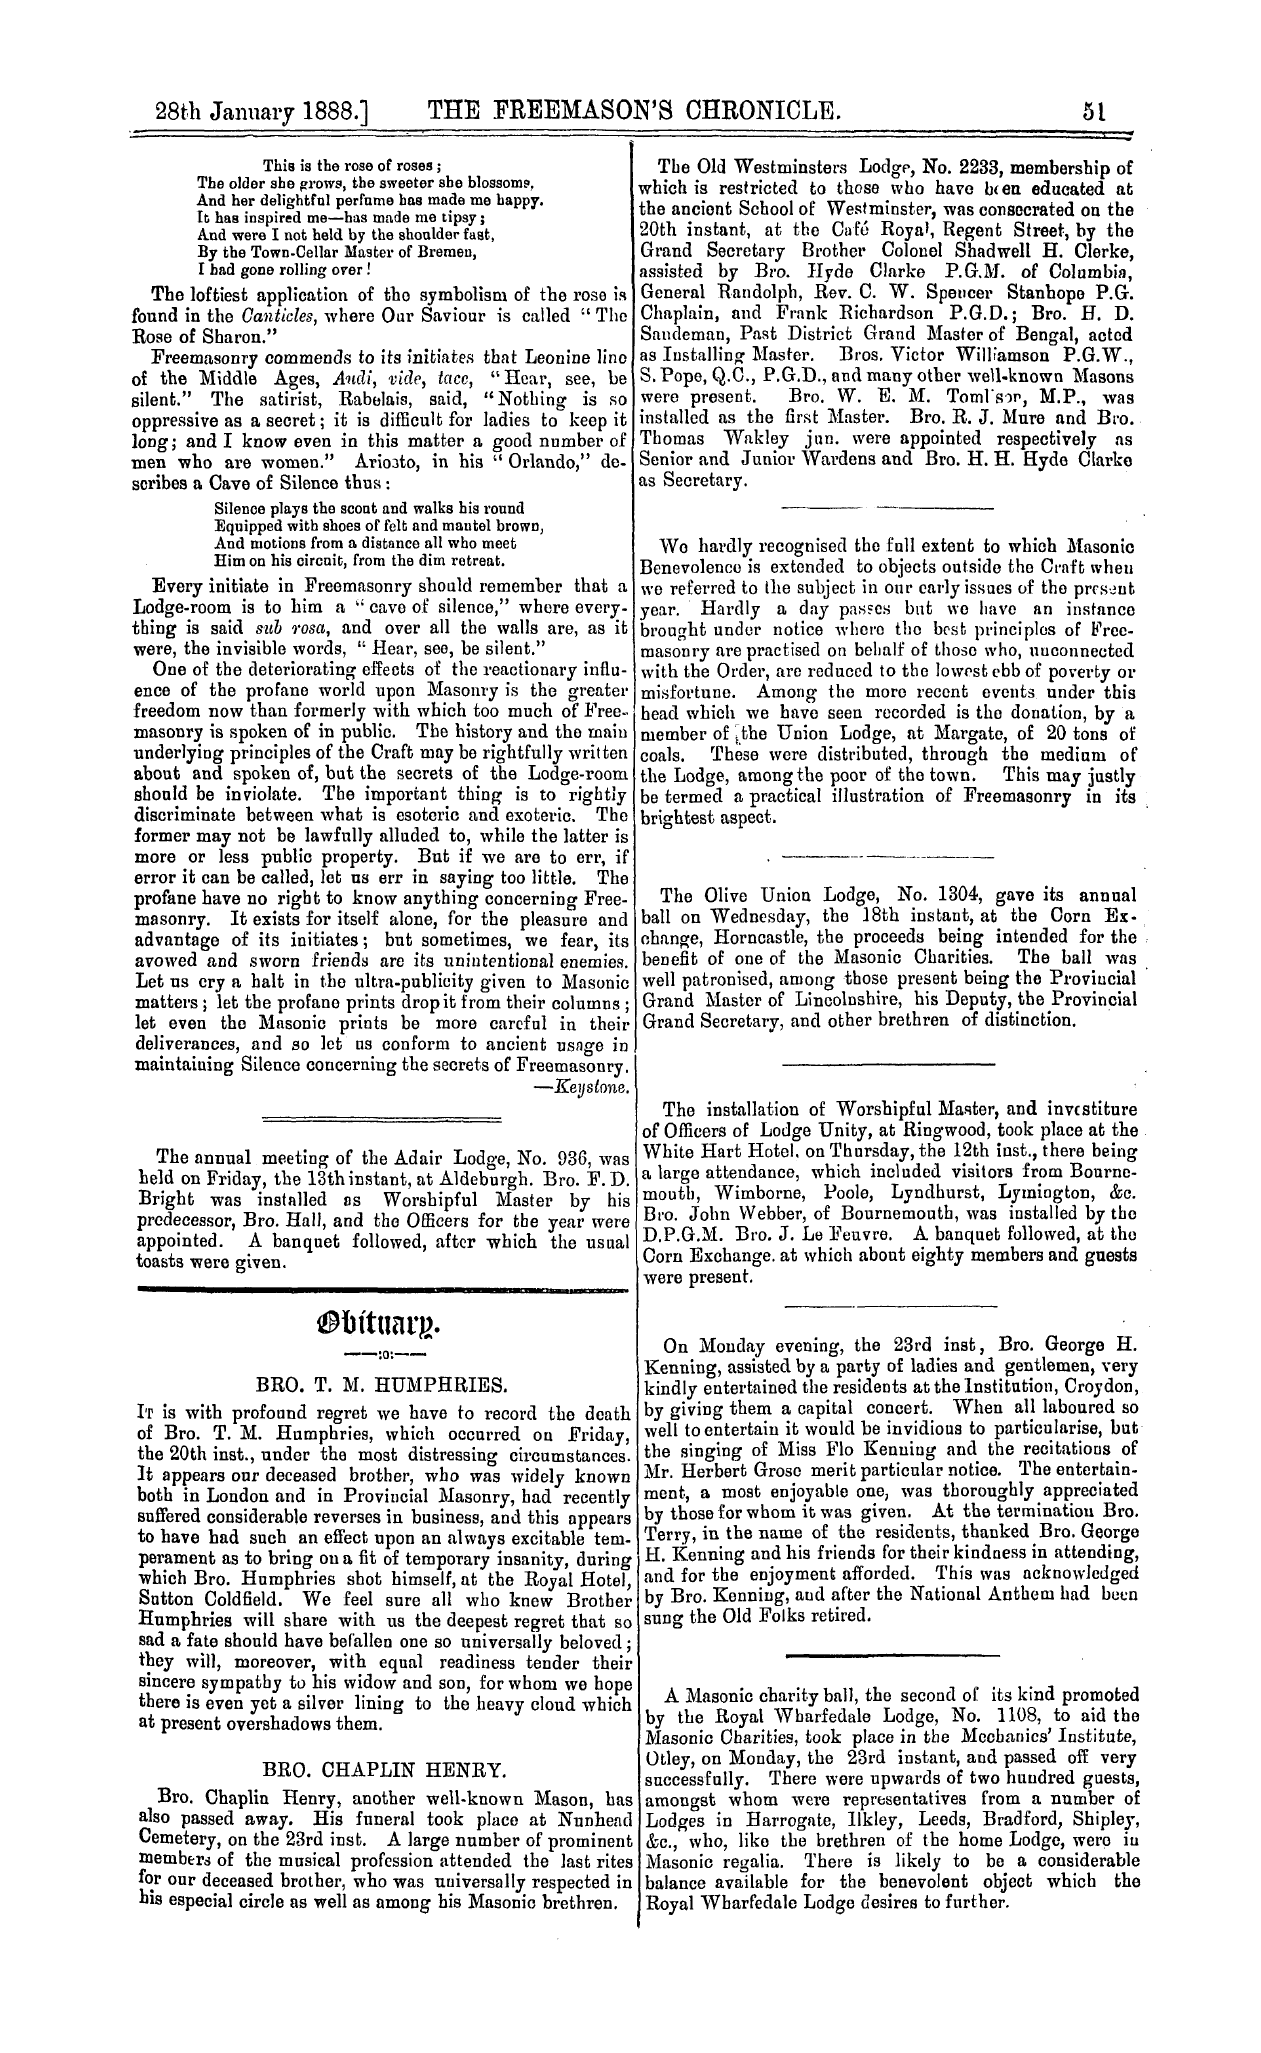 The Freemason's Chronicle: 1888-01-28: 3